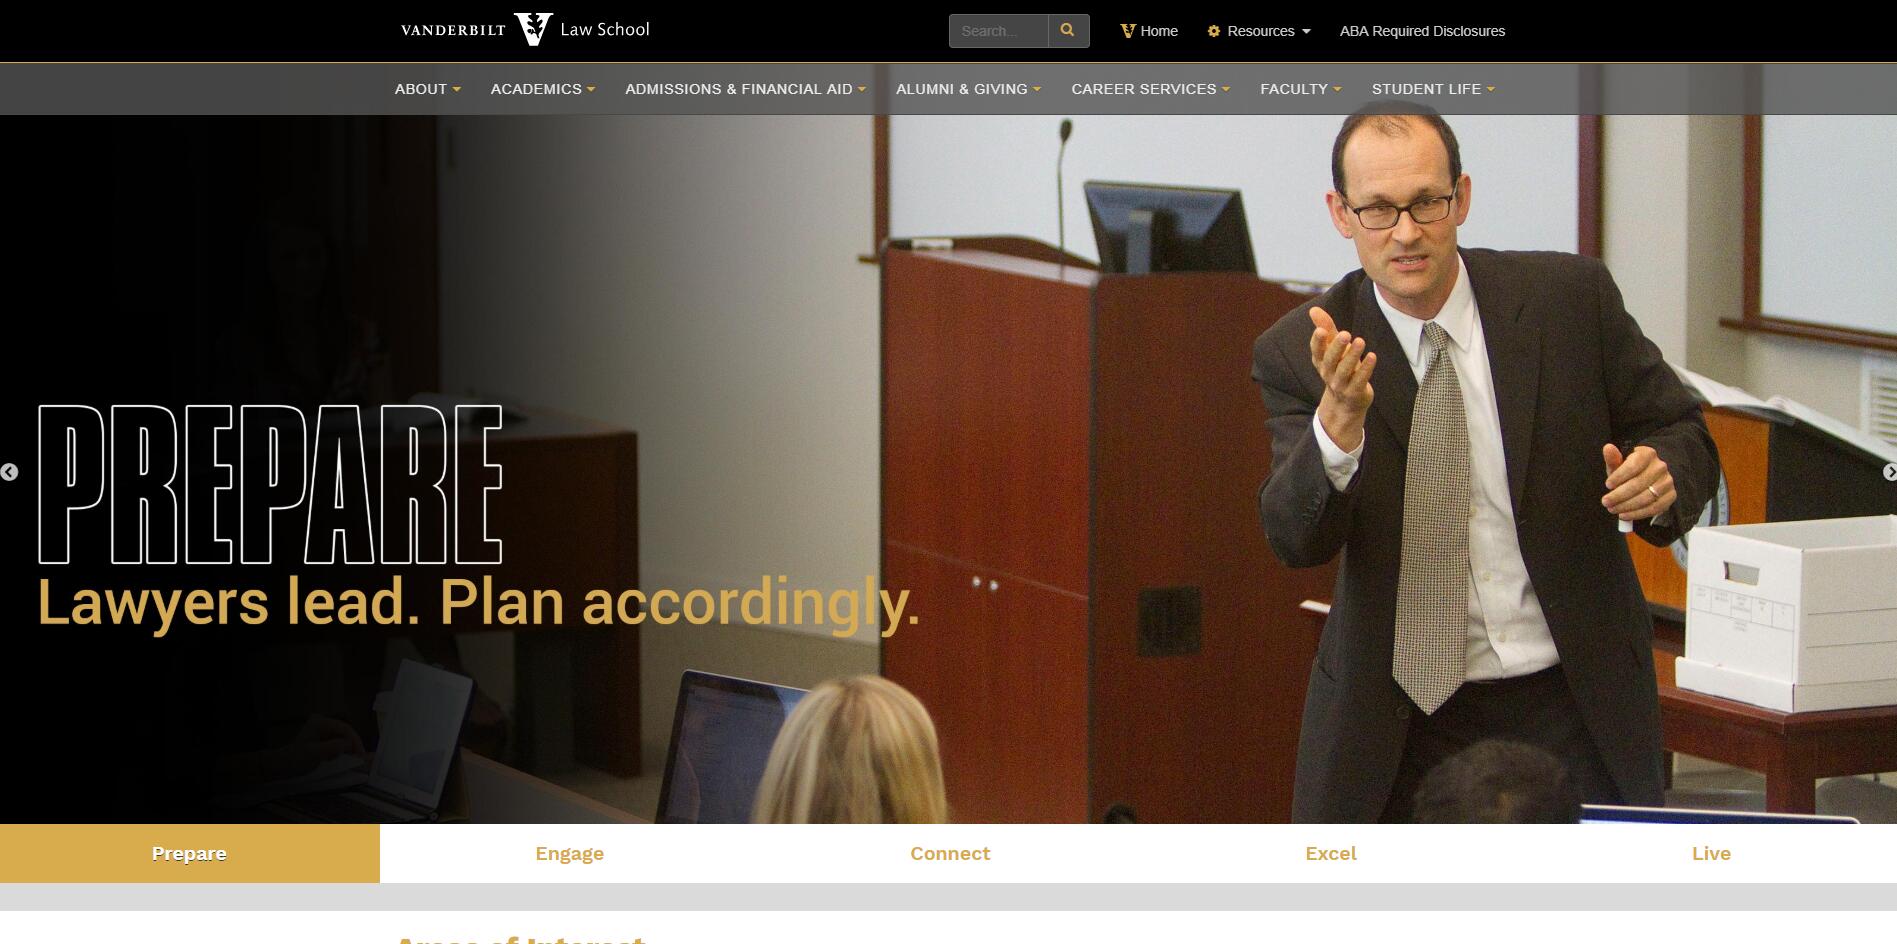 The Law School at Vanderbilt University